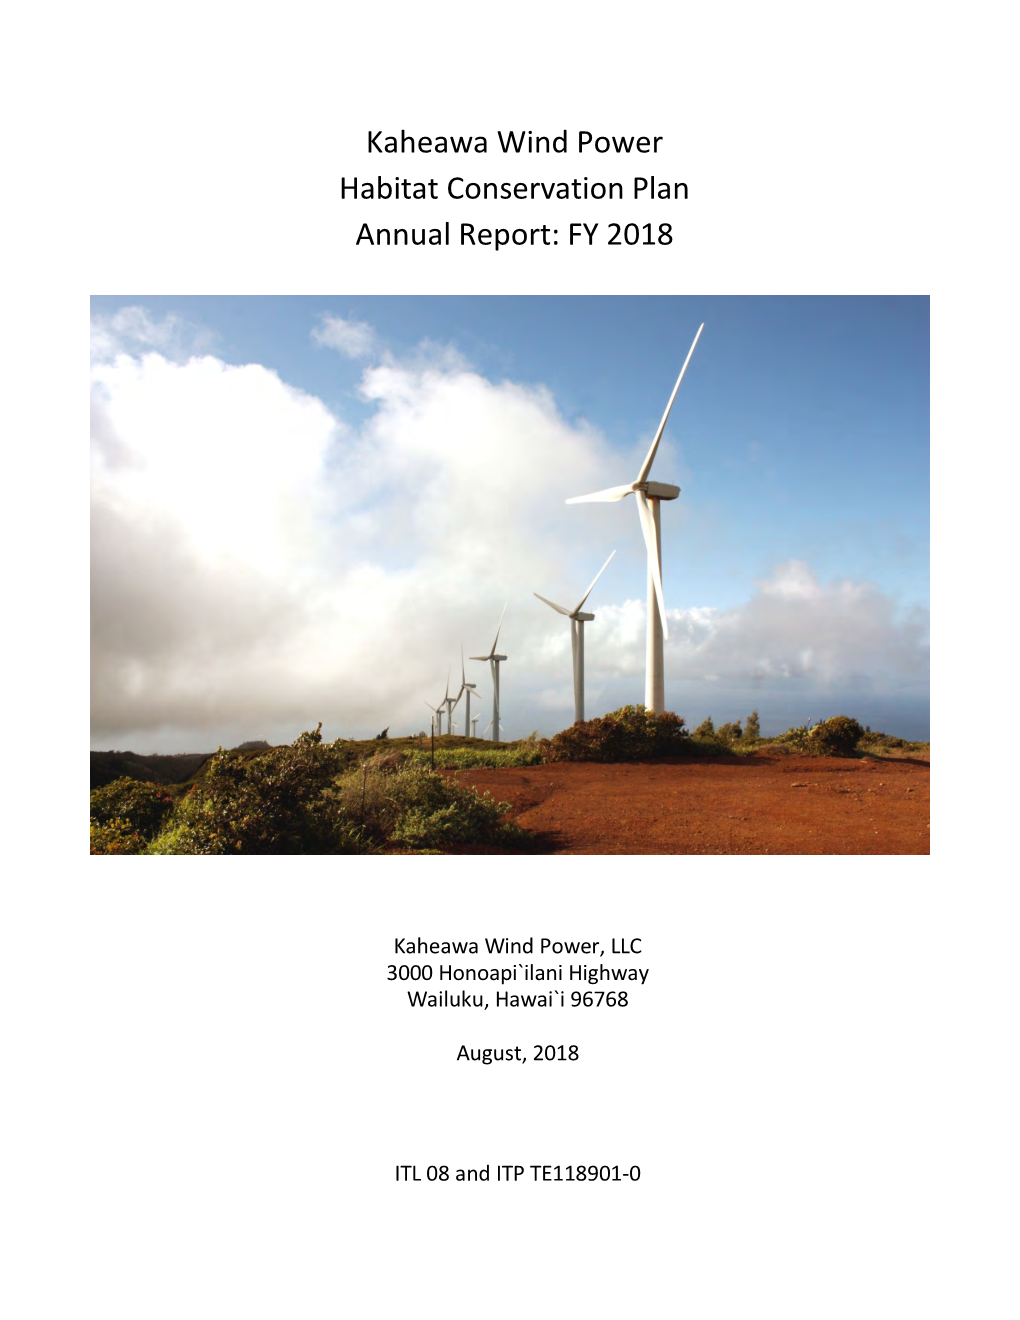 Kaheawa Wind Power Habitat Conservation Plan Annual Report: FY 2018